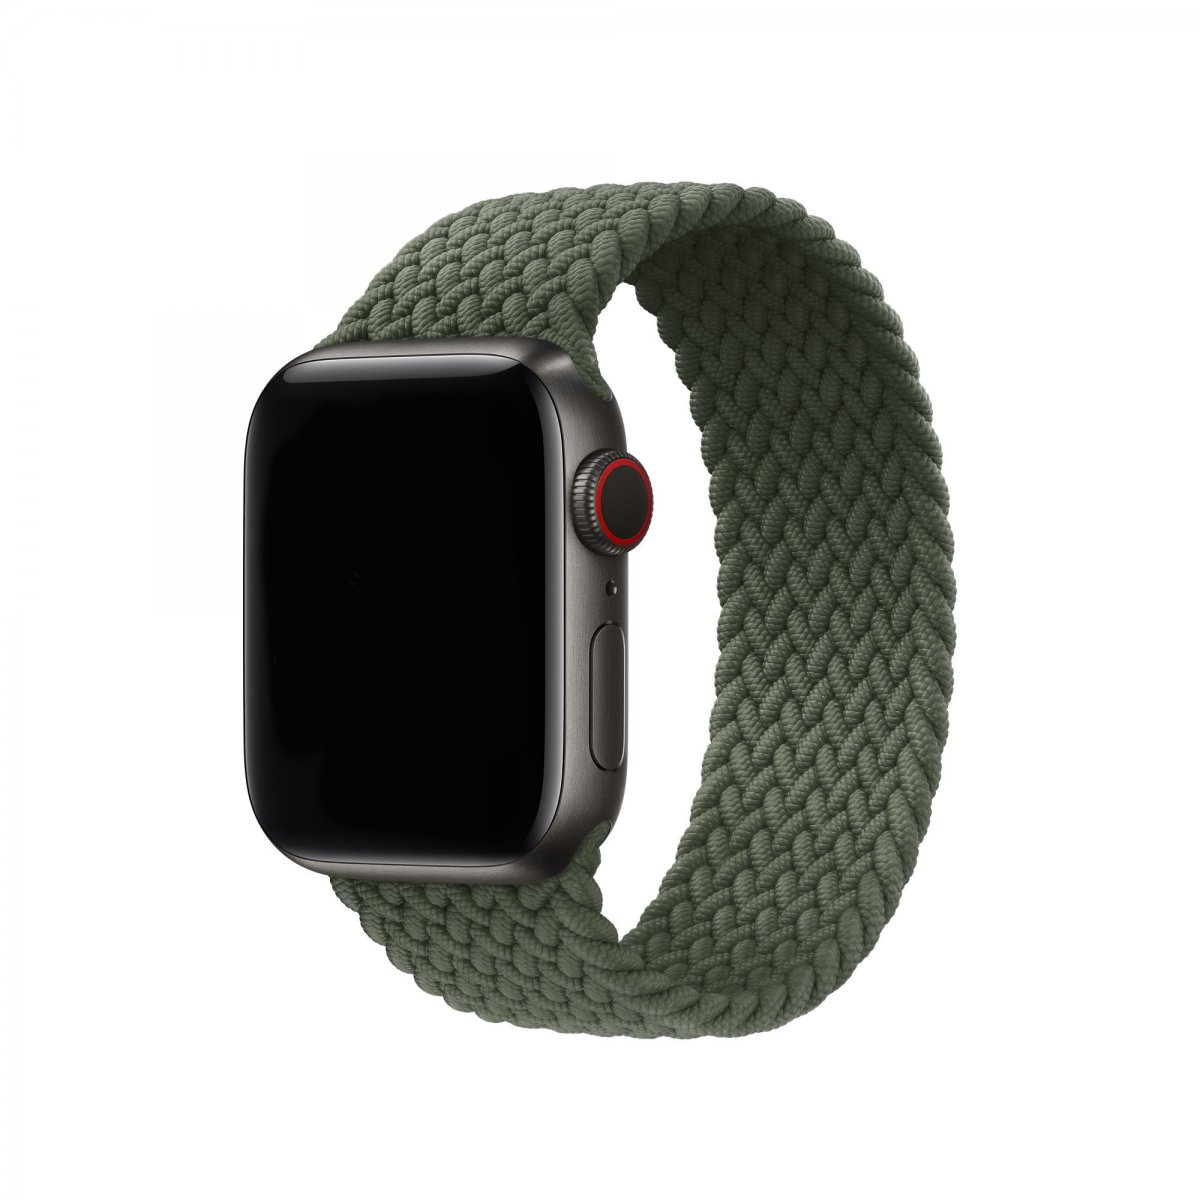 Řemínek iMore Braided Solo Loop Apple Watch Series 1/2/3 38mm - tmavě zelený (XS)